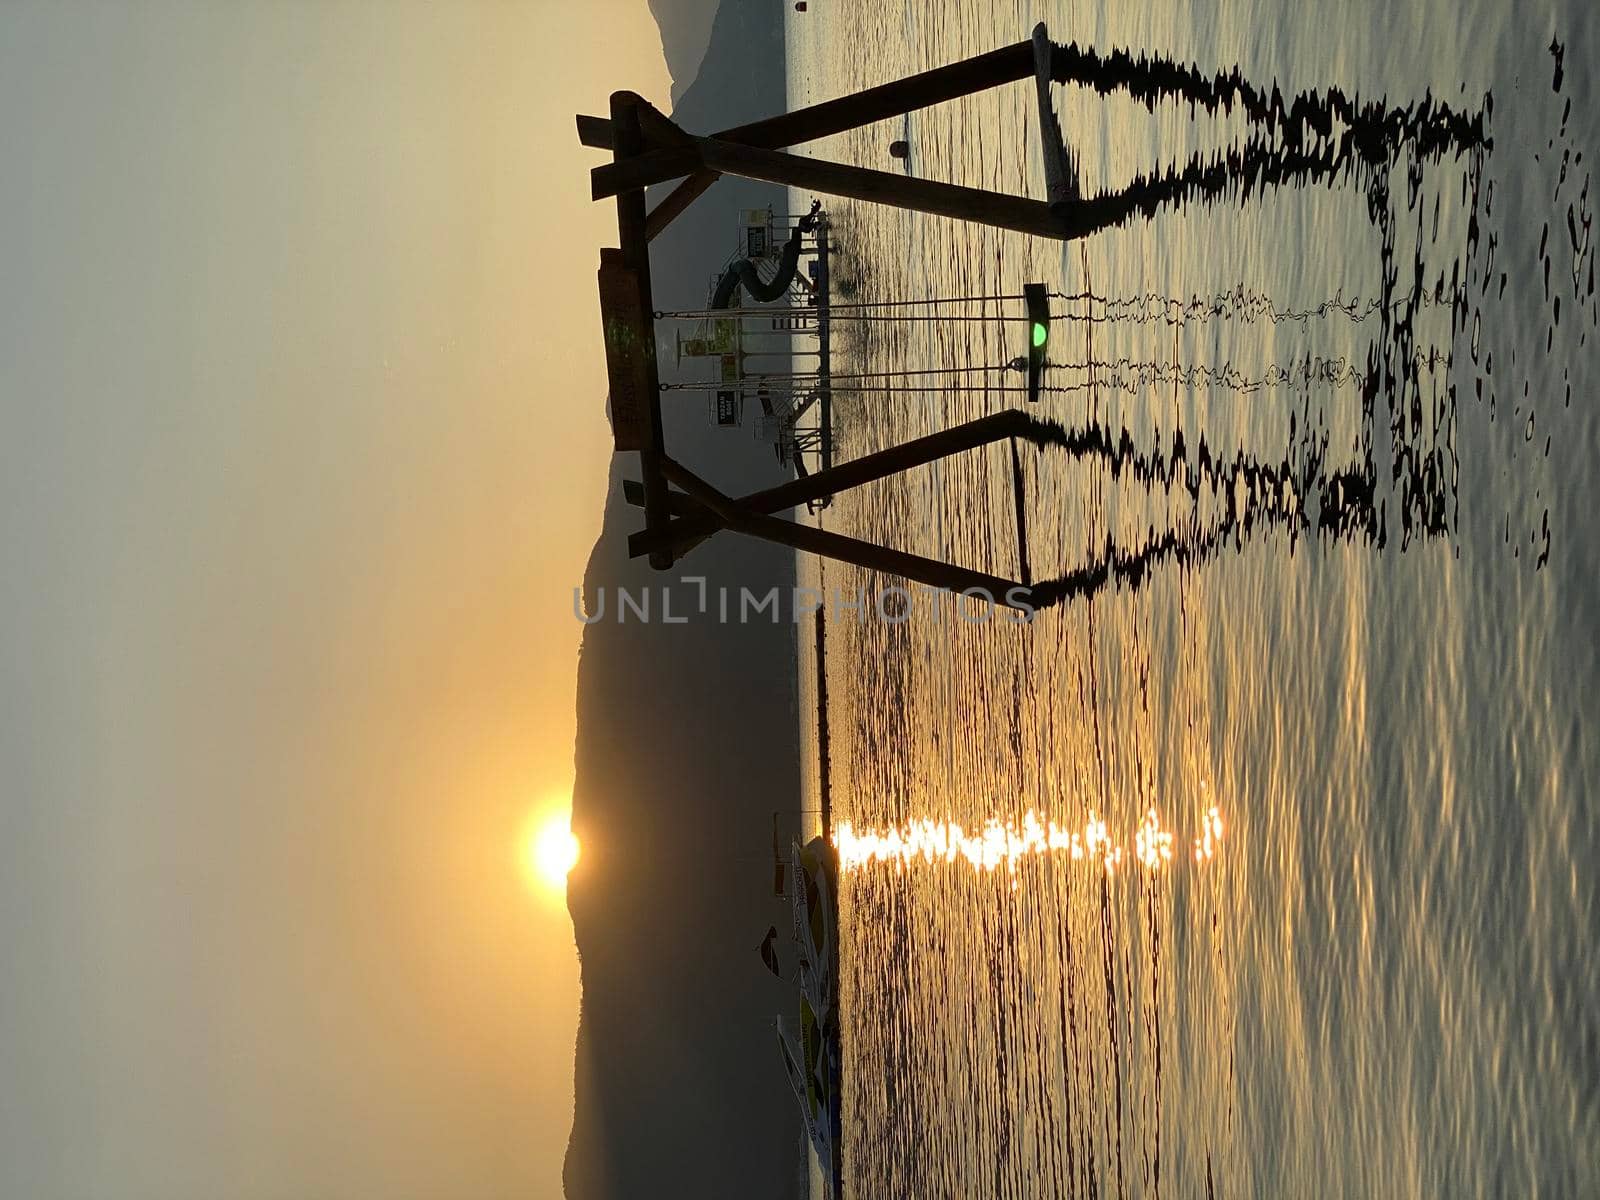 Tourist admiring the sunrise on tropical island - stock photo. High quality photo